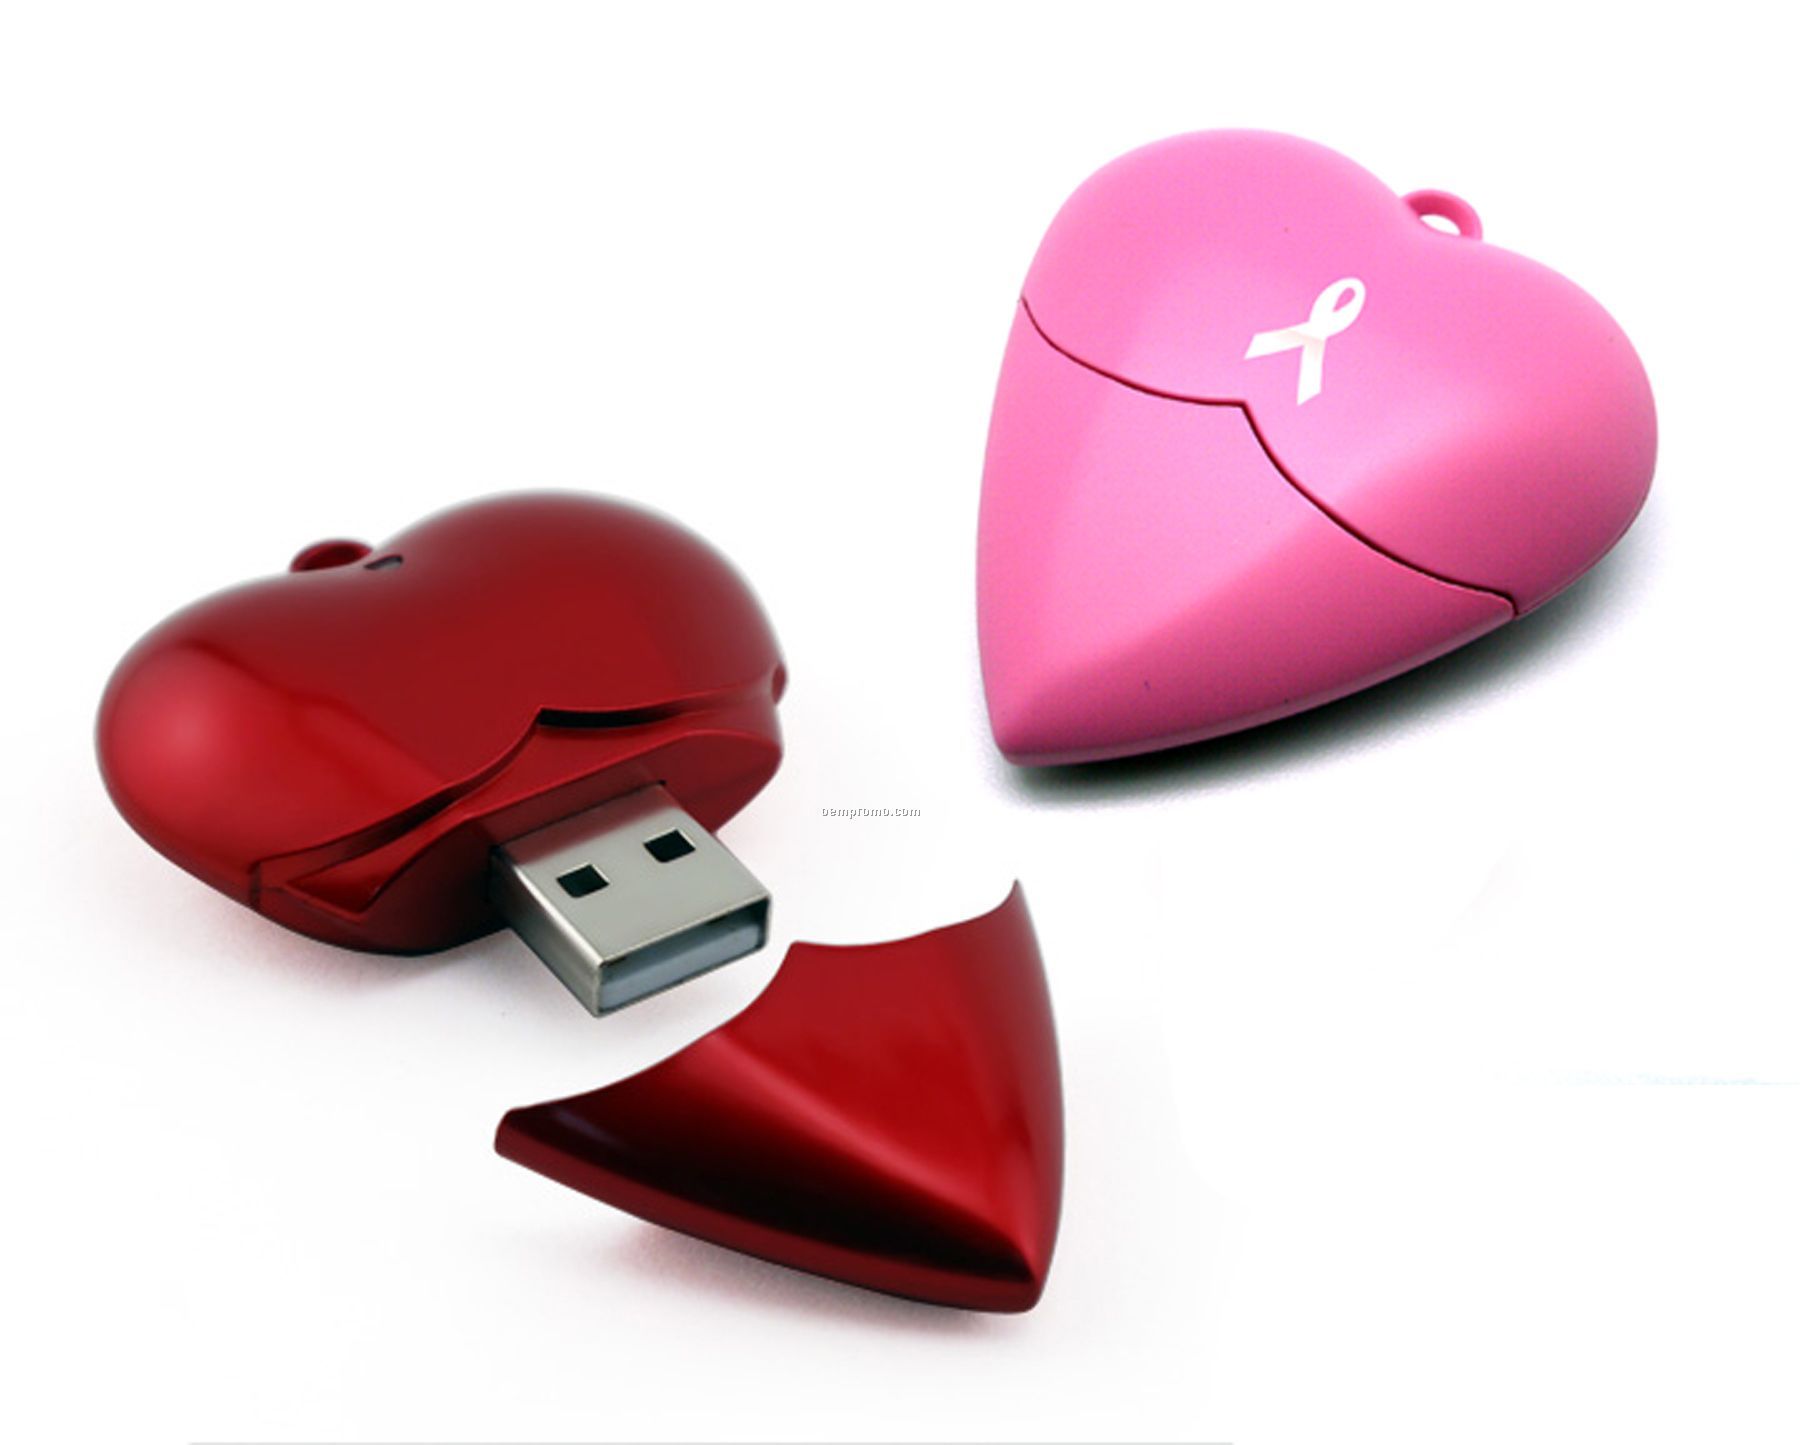 2 Gb Specialty 900r Series USB Drive - Heart